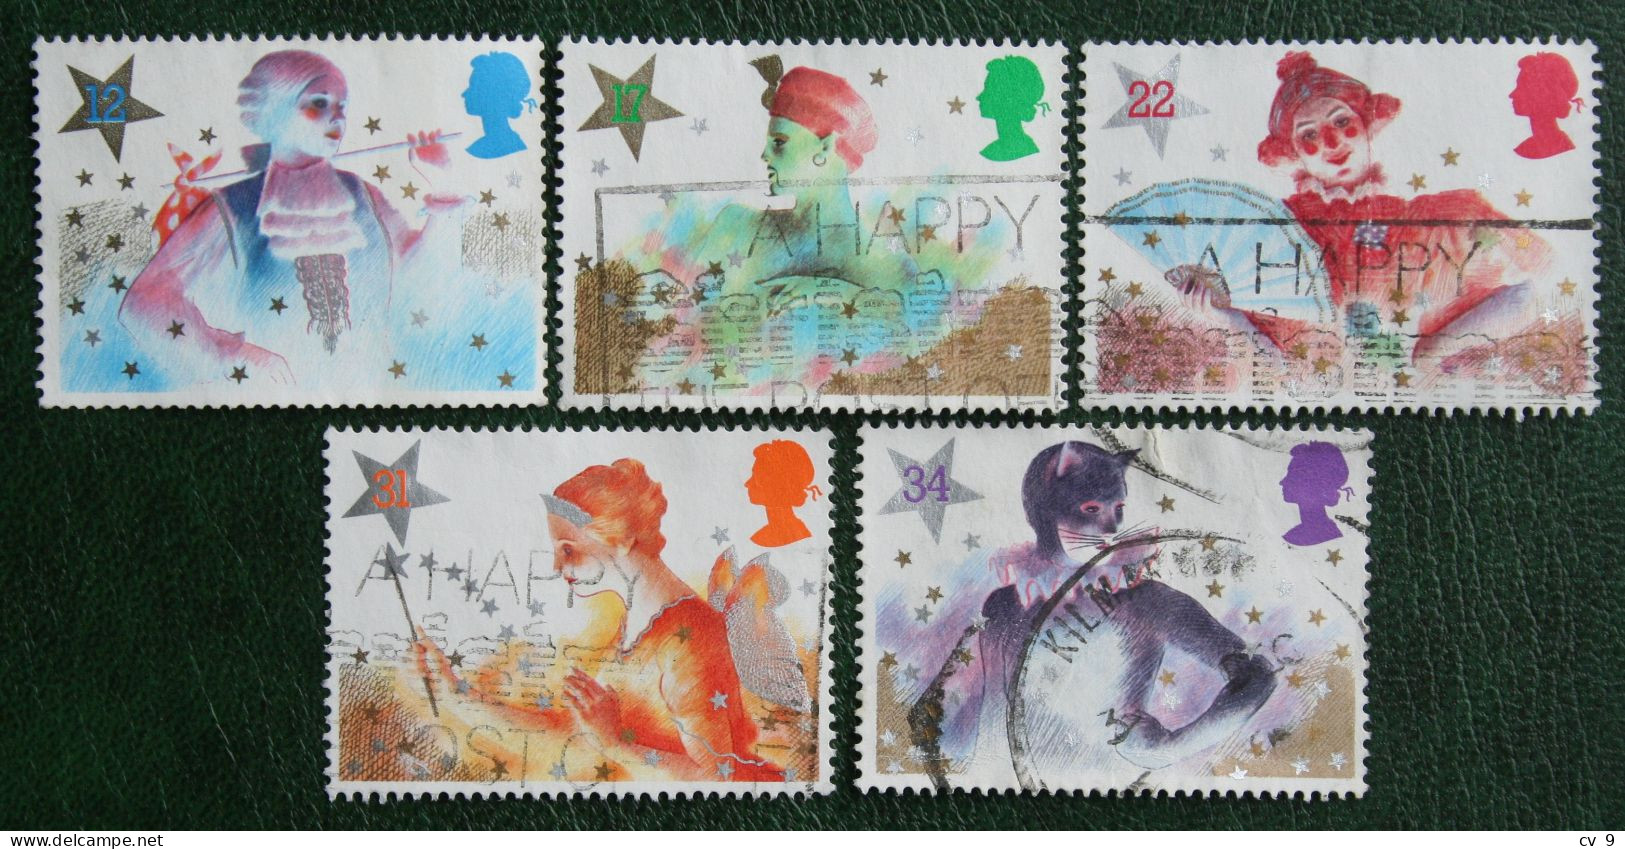 Natale Weihnachten Xmas Noel Kerst (Mi 1051-1055) 1985 Used Gebruikt Oblitere ENGLAND GRANDE-BRETAGNE GB GREAT BRITAIN - Used Stamps